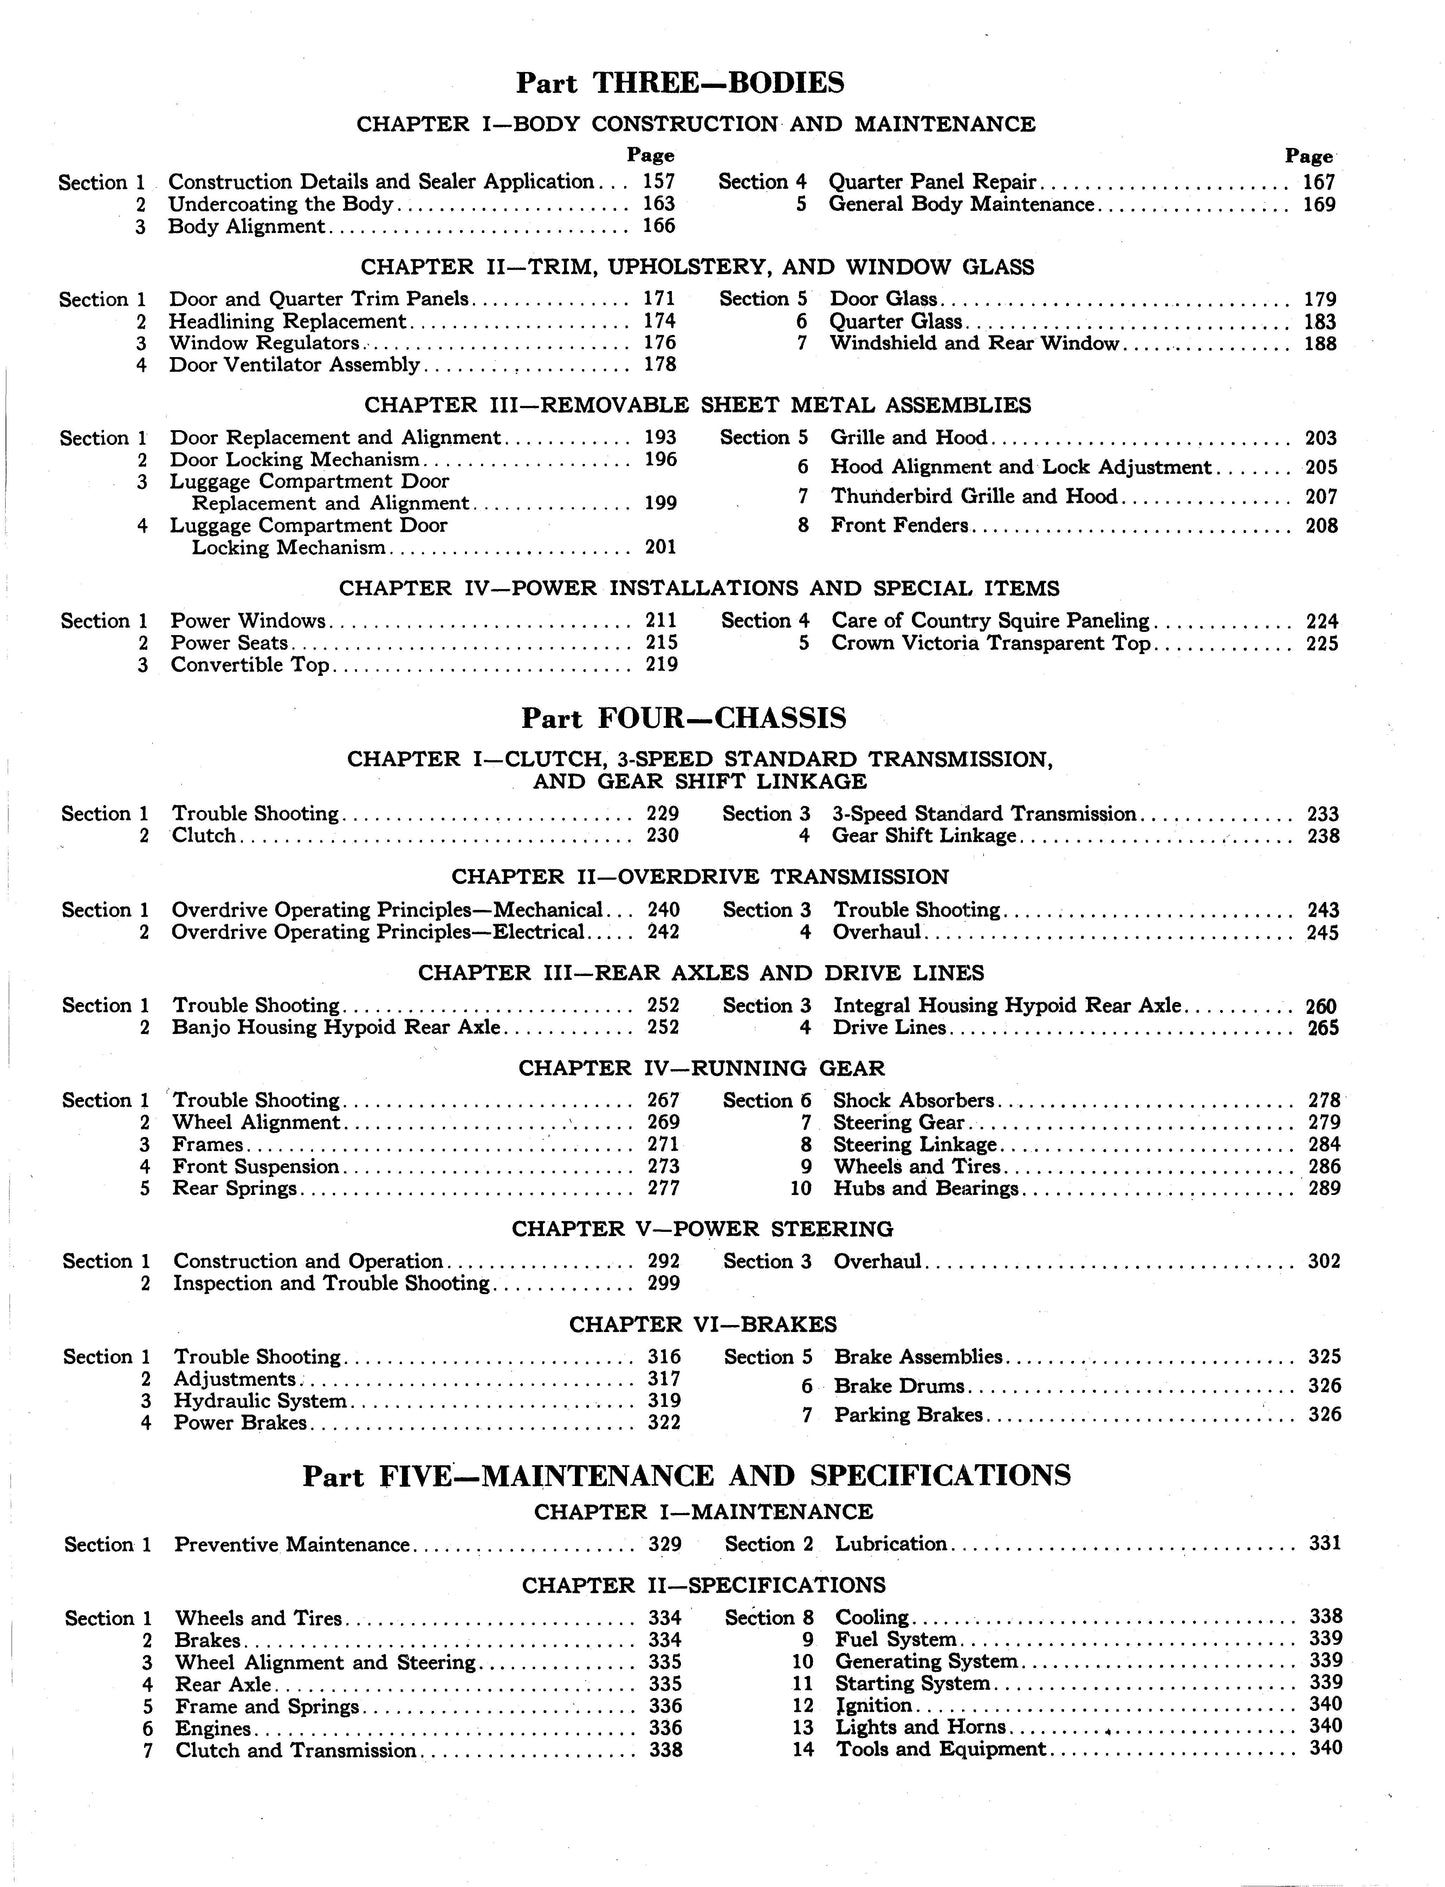 1955 Ford Shop Manual - All Models